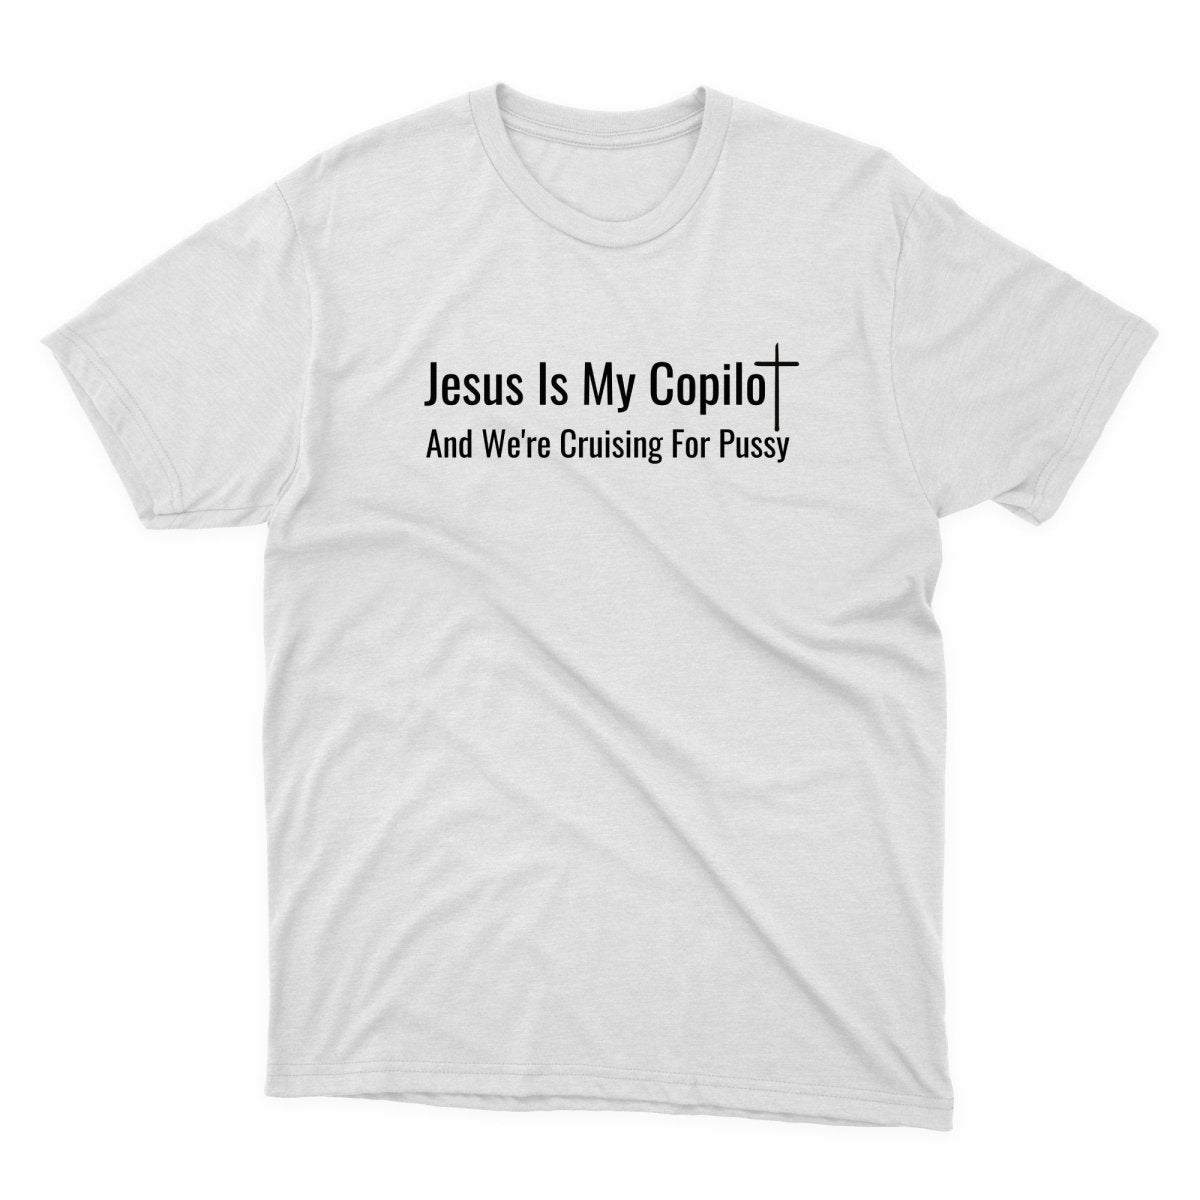 Jesus Copilot Shirt - stickerbullJesus Copilot ShirtShirtsPrintifystickerbull49823545558400377919WhiteSa white t - shirt that says jesus is my copilot and we '